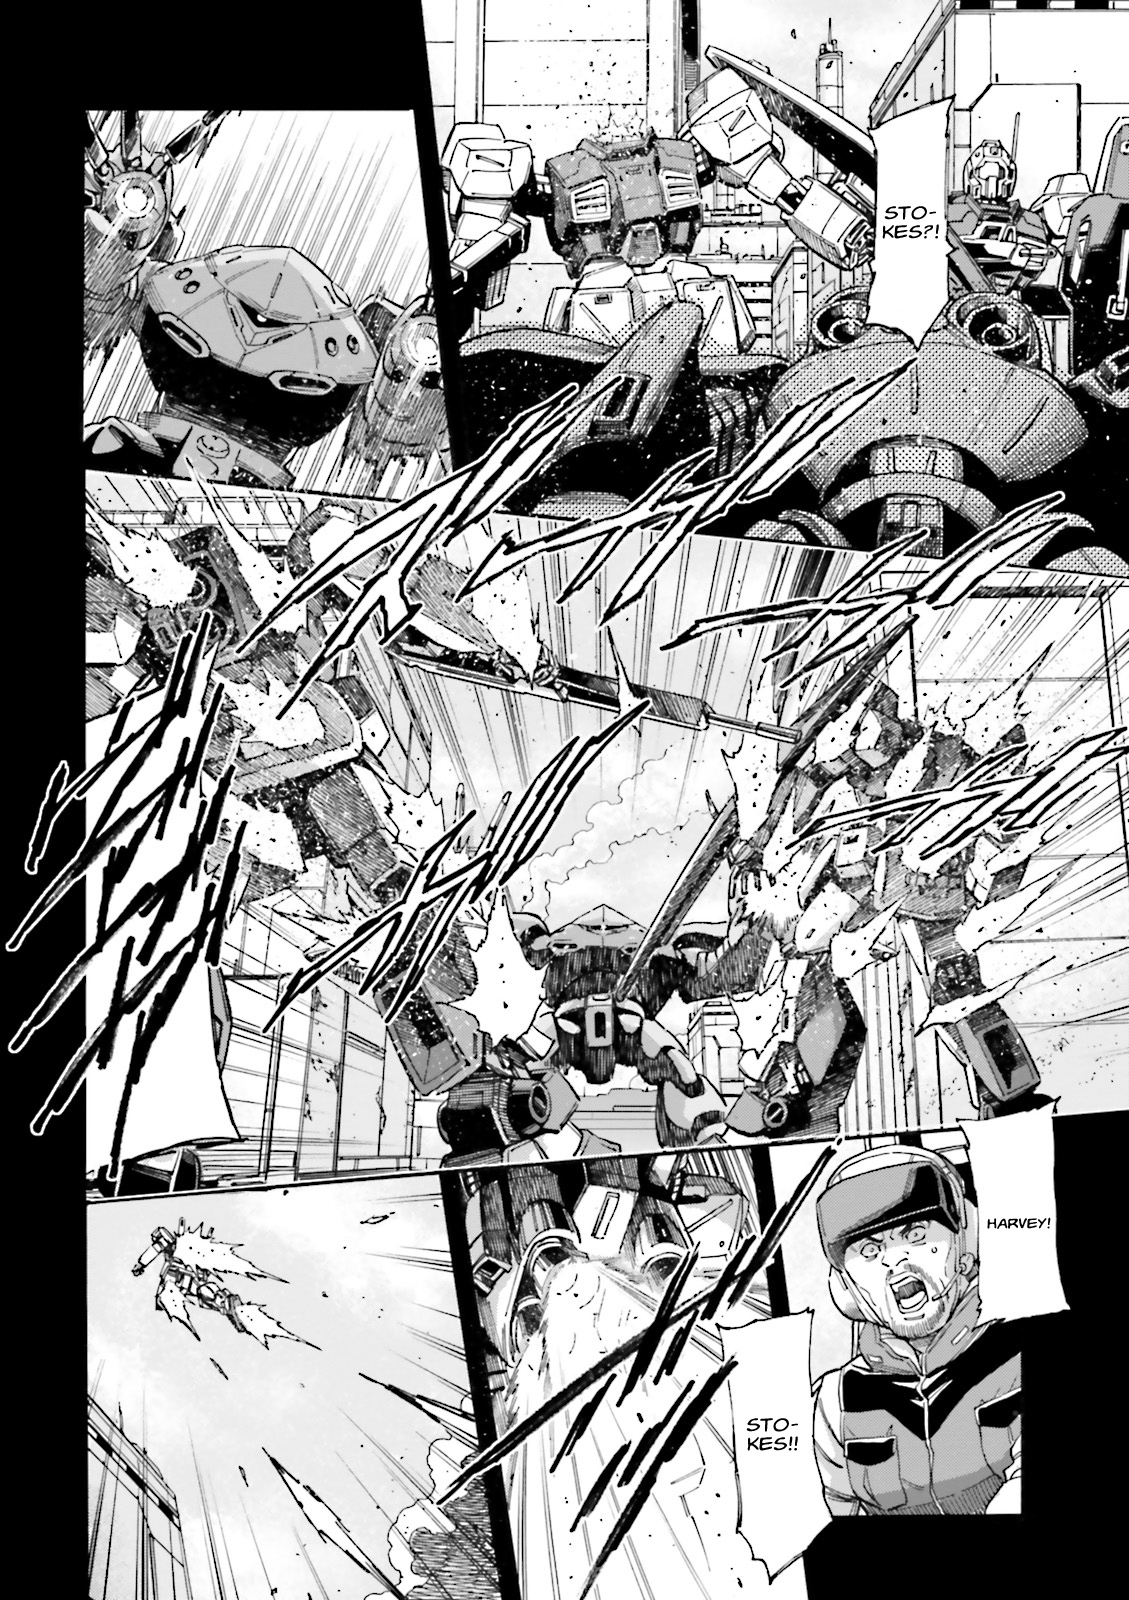 Kidou Senshi Gundam UC (Unicorn) Bande Dessinée: Episode 0 Vol. 1 Ch. 2 Carlos Craig <Faith and Rebellion>